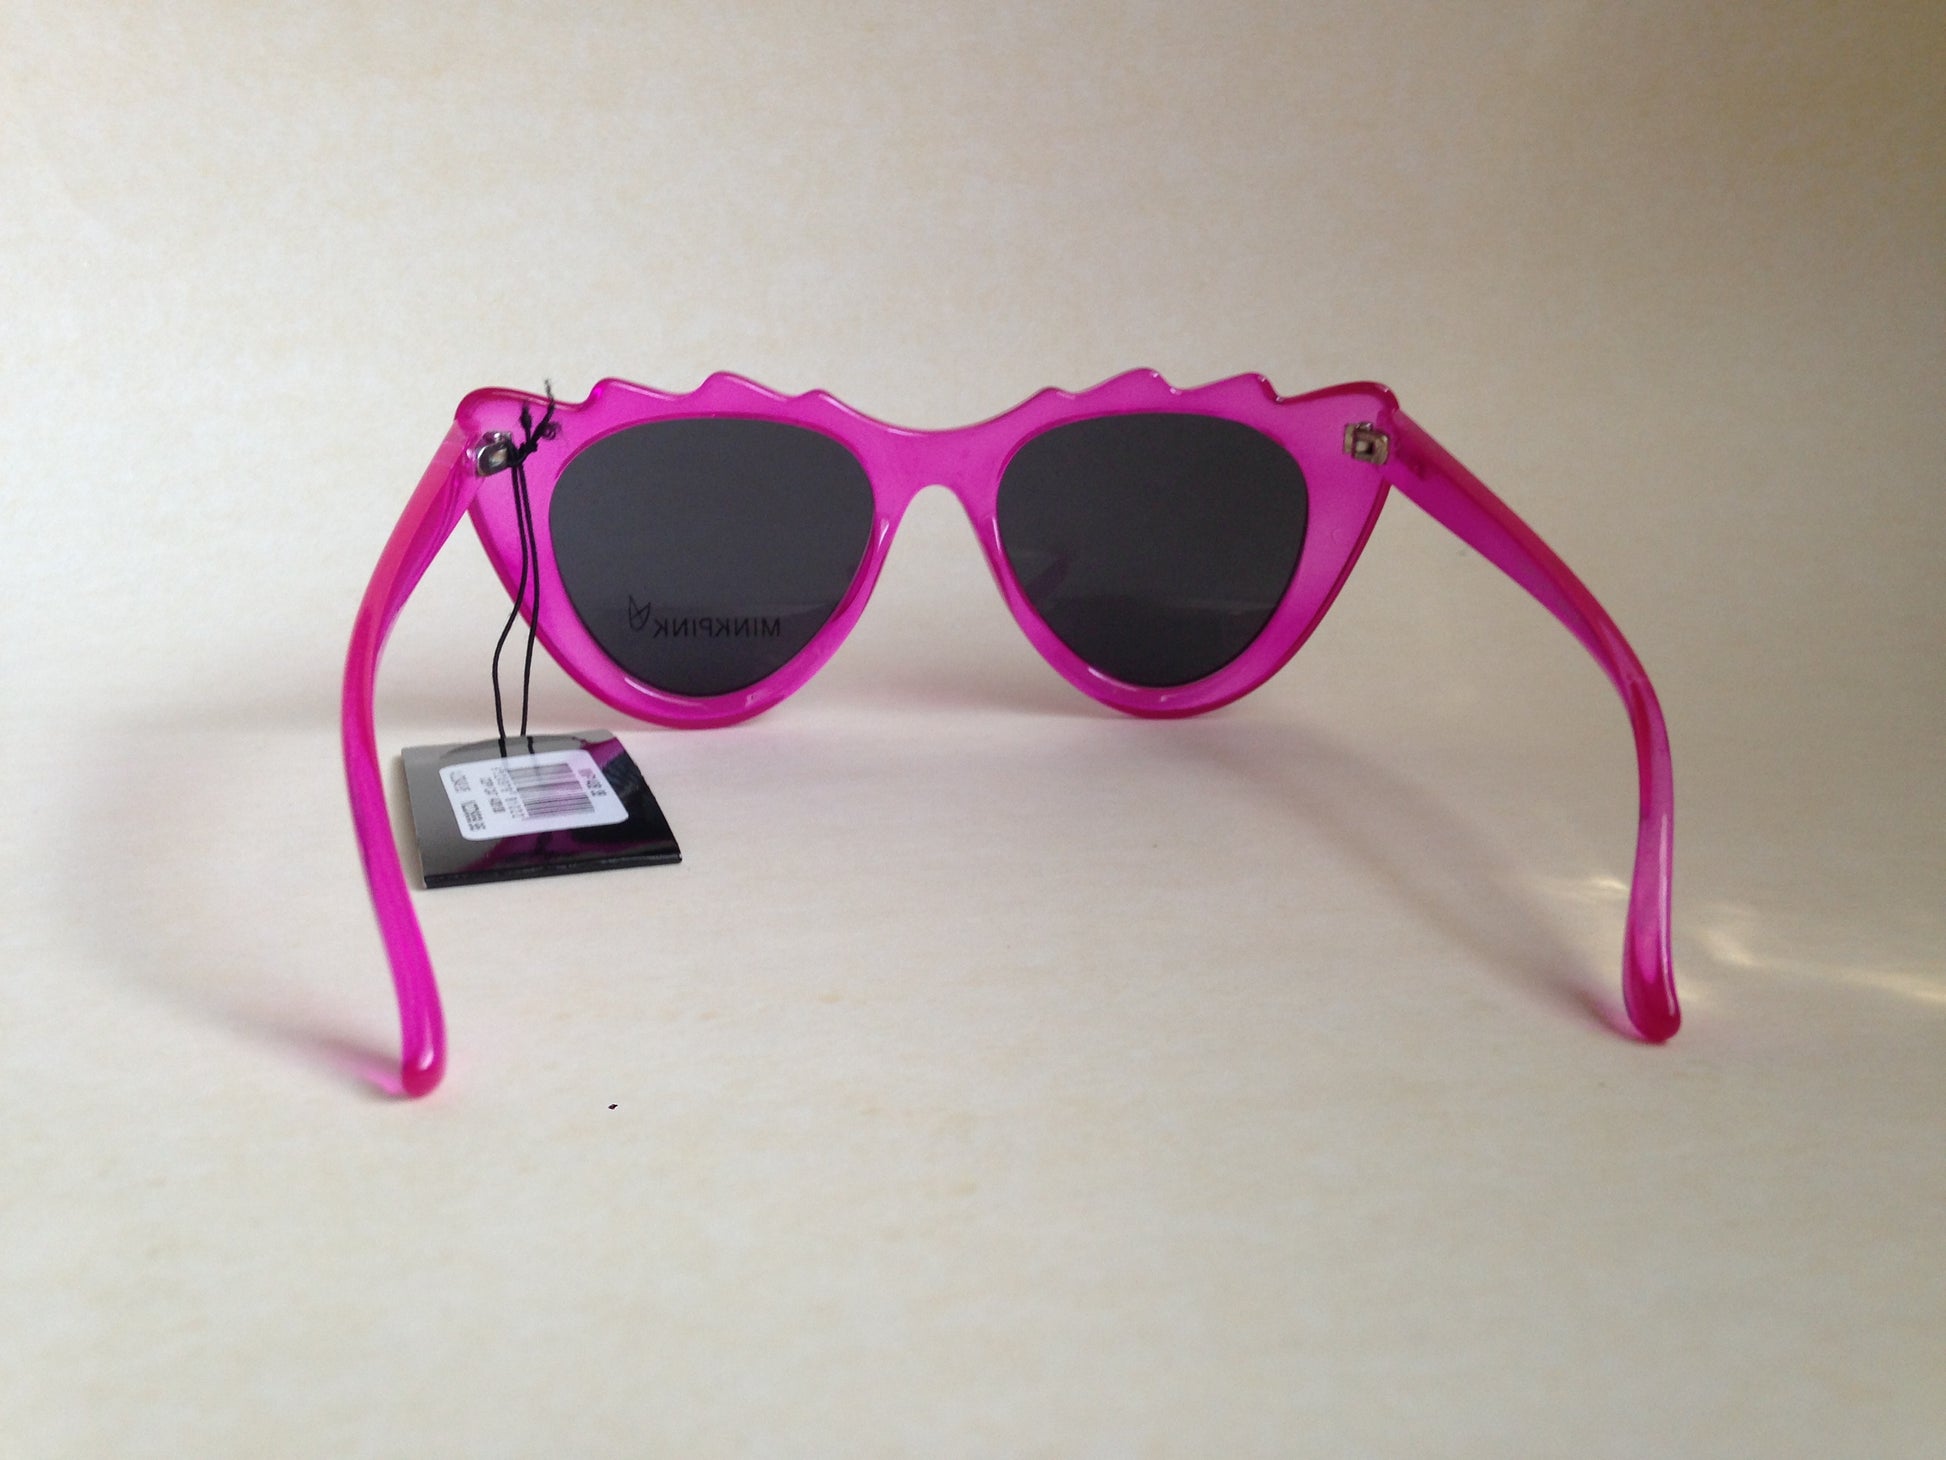 Minkpink Cat Eye Sunglasses Copy Cat 1408138 Flamingo Pink Frame Gray Lens - Sunglasses